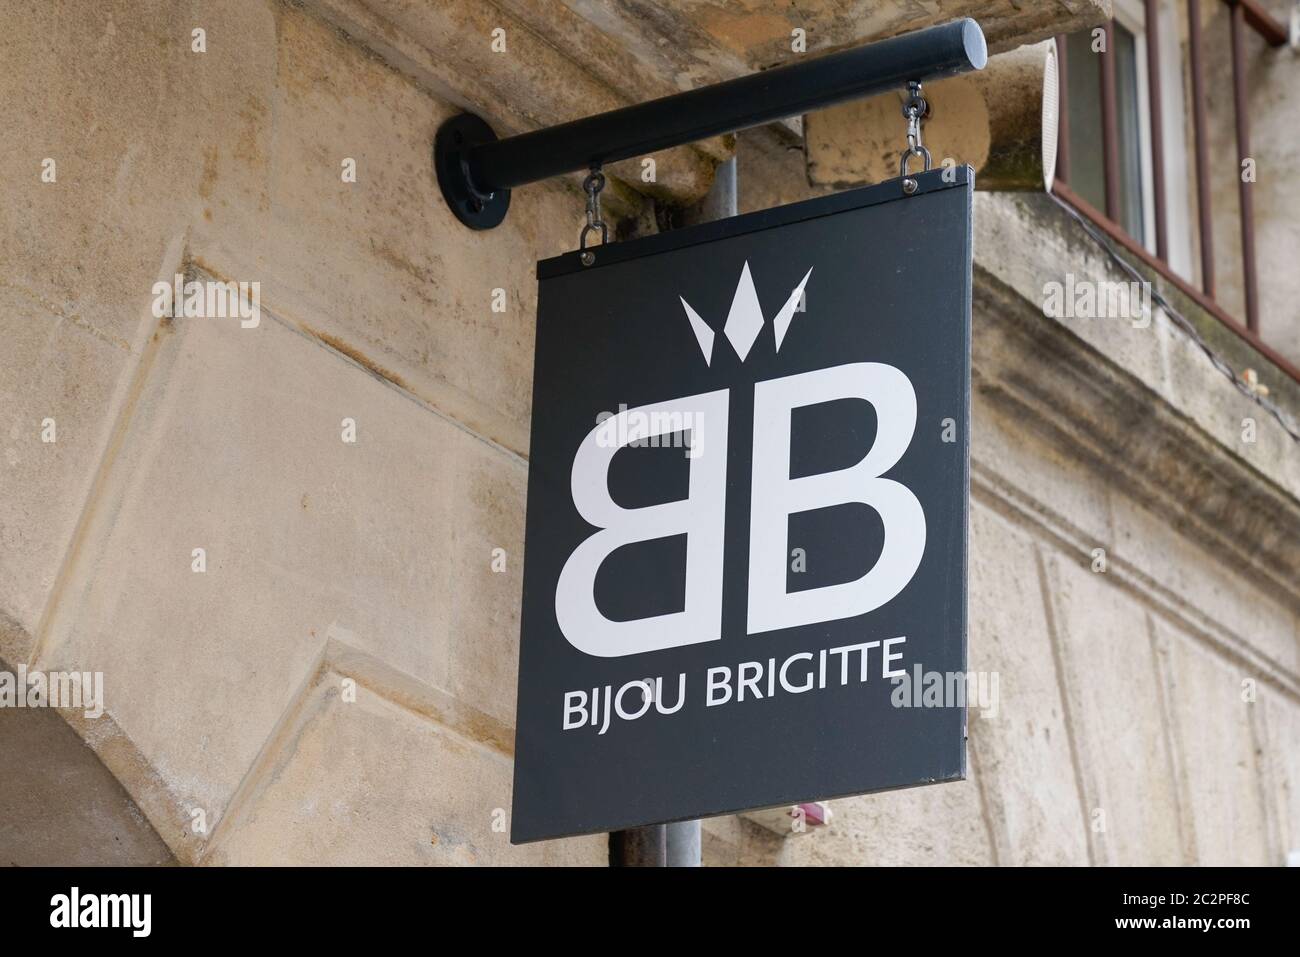 Bijou Brigitte Logo High Resolution Stock Photography and Images - Alamy